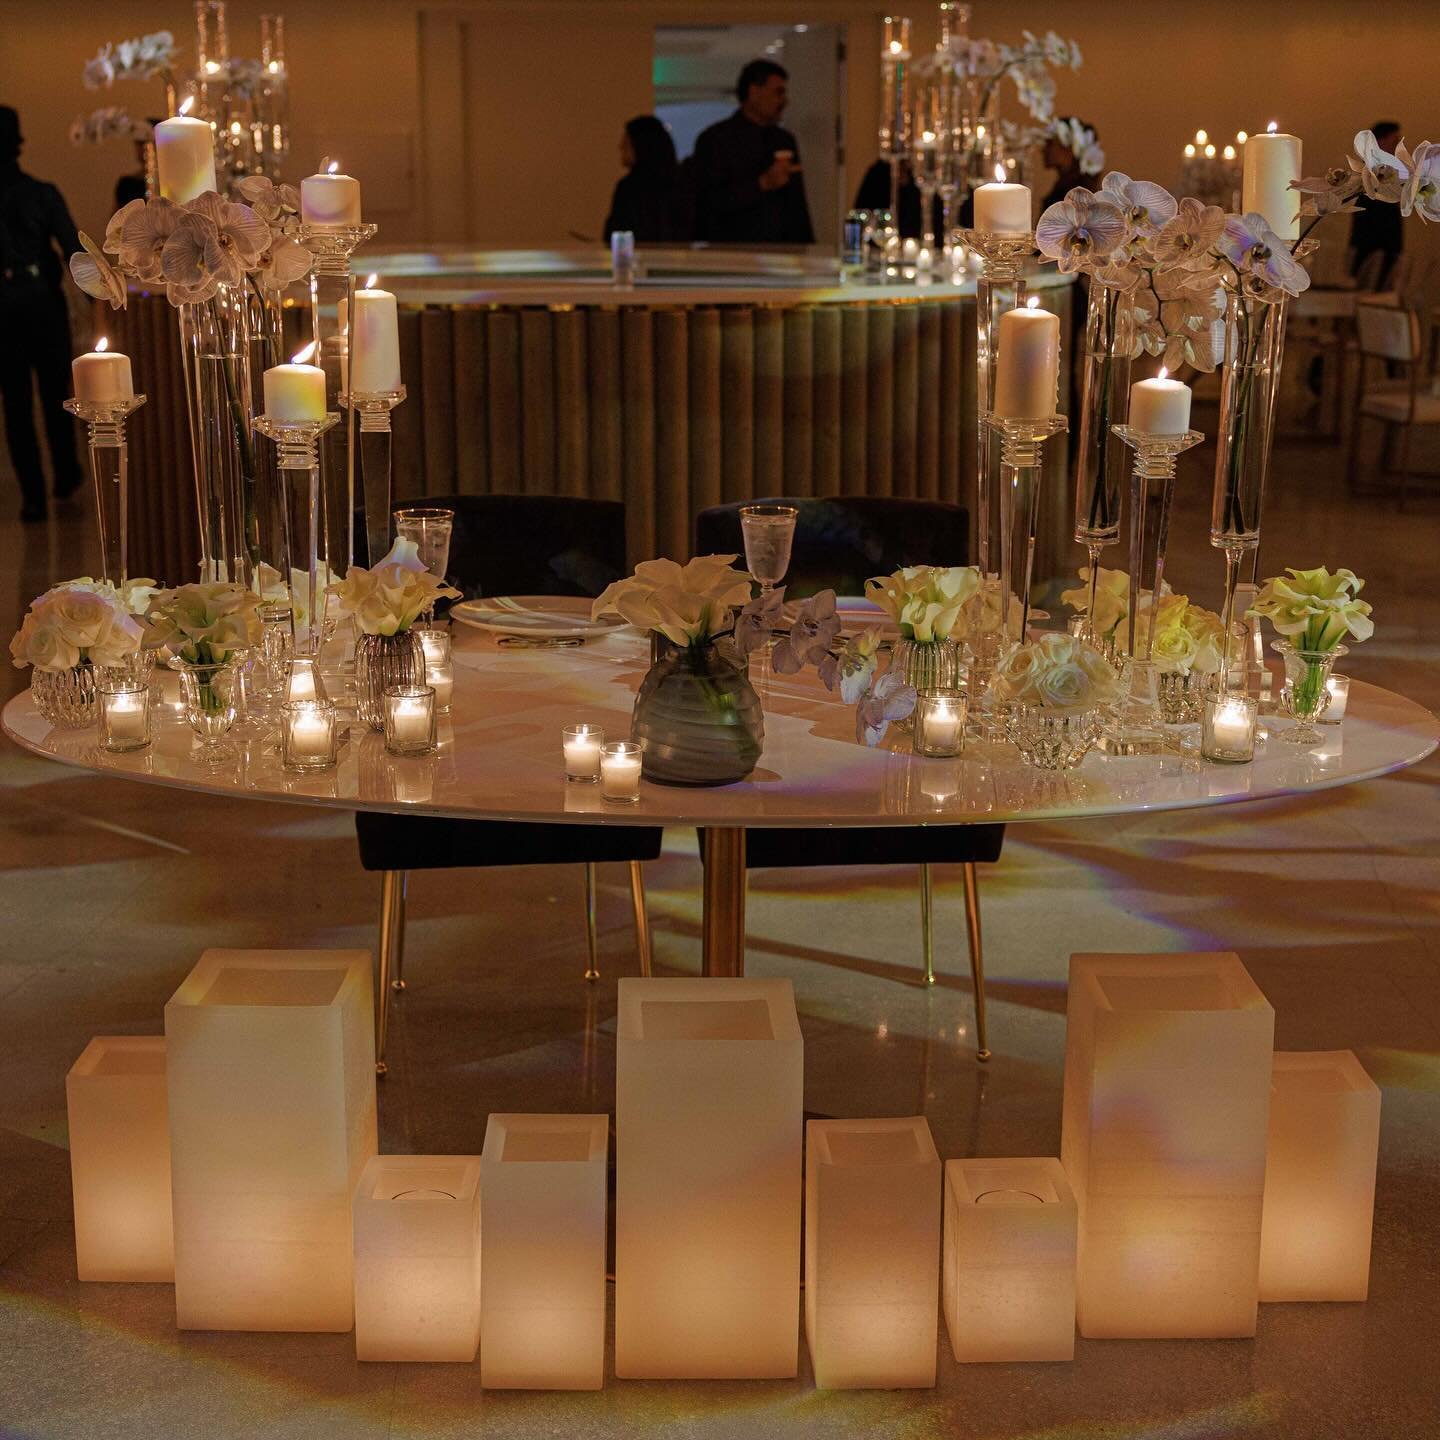 The perfect glowing sweetheart table for the glowing and gorgeous bride &amp; groom!
-
@cammur 
@sharkowitz
@jspstudios
@jenashproductions 
@unitedprojection 
@thetemplehouseweddings 
-
-
#weddings #miamiwedding #weddingvenues #weddingvenuemiami #wed